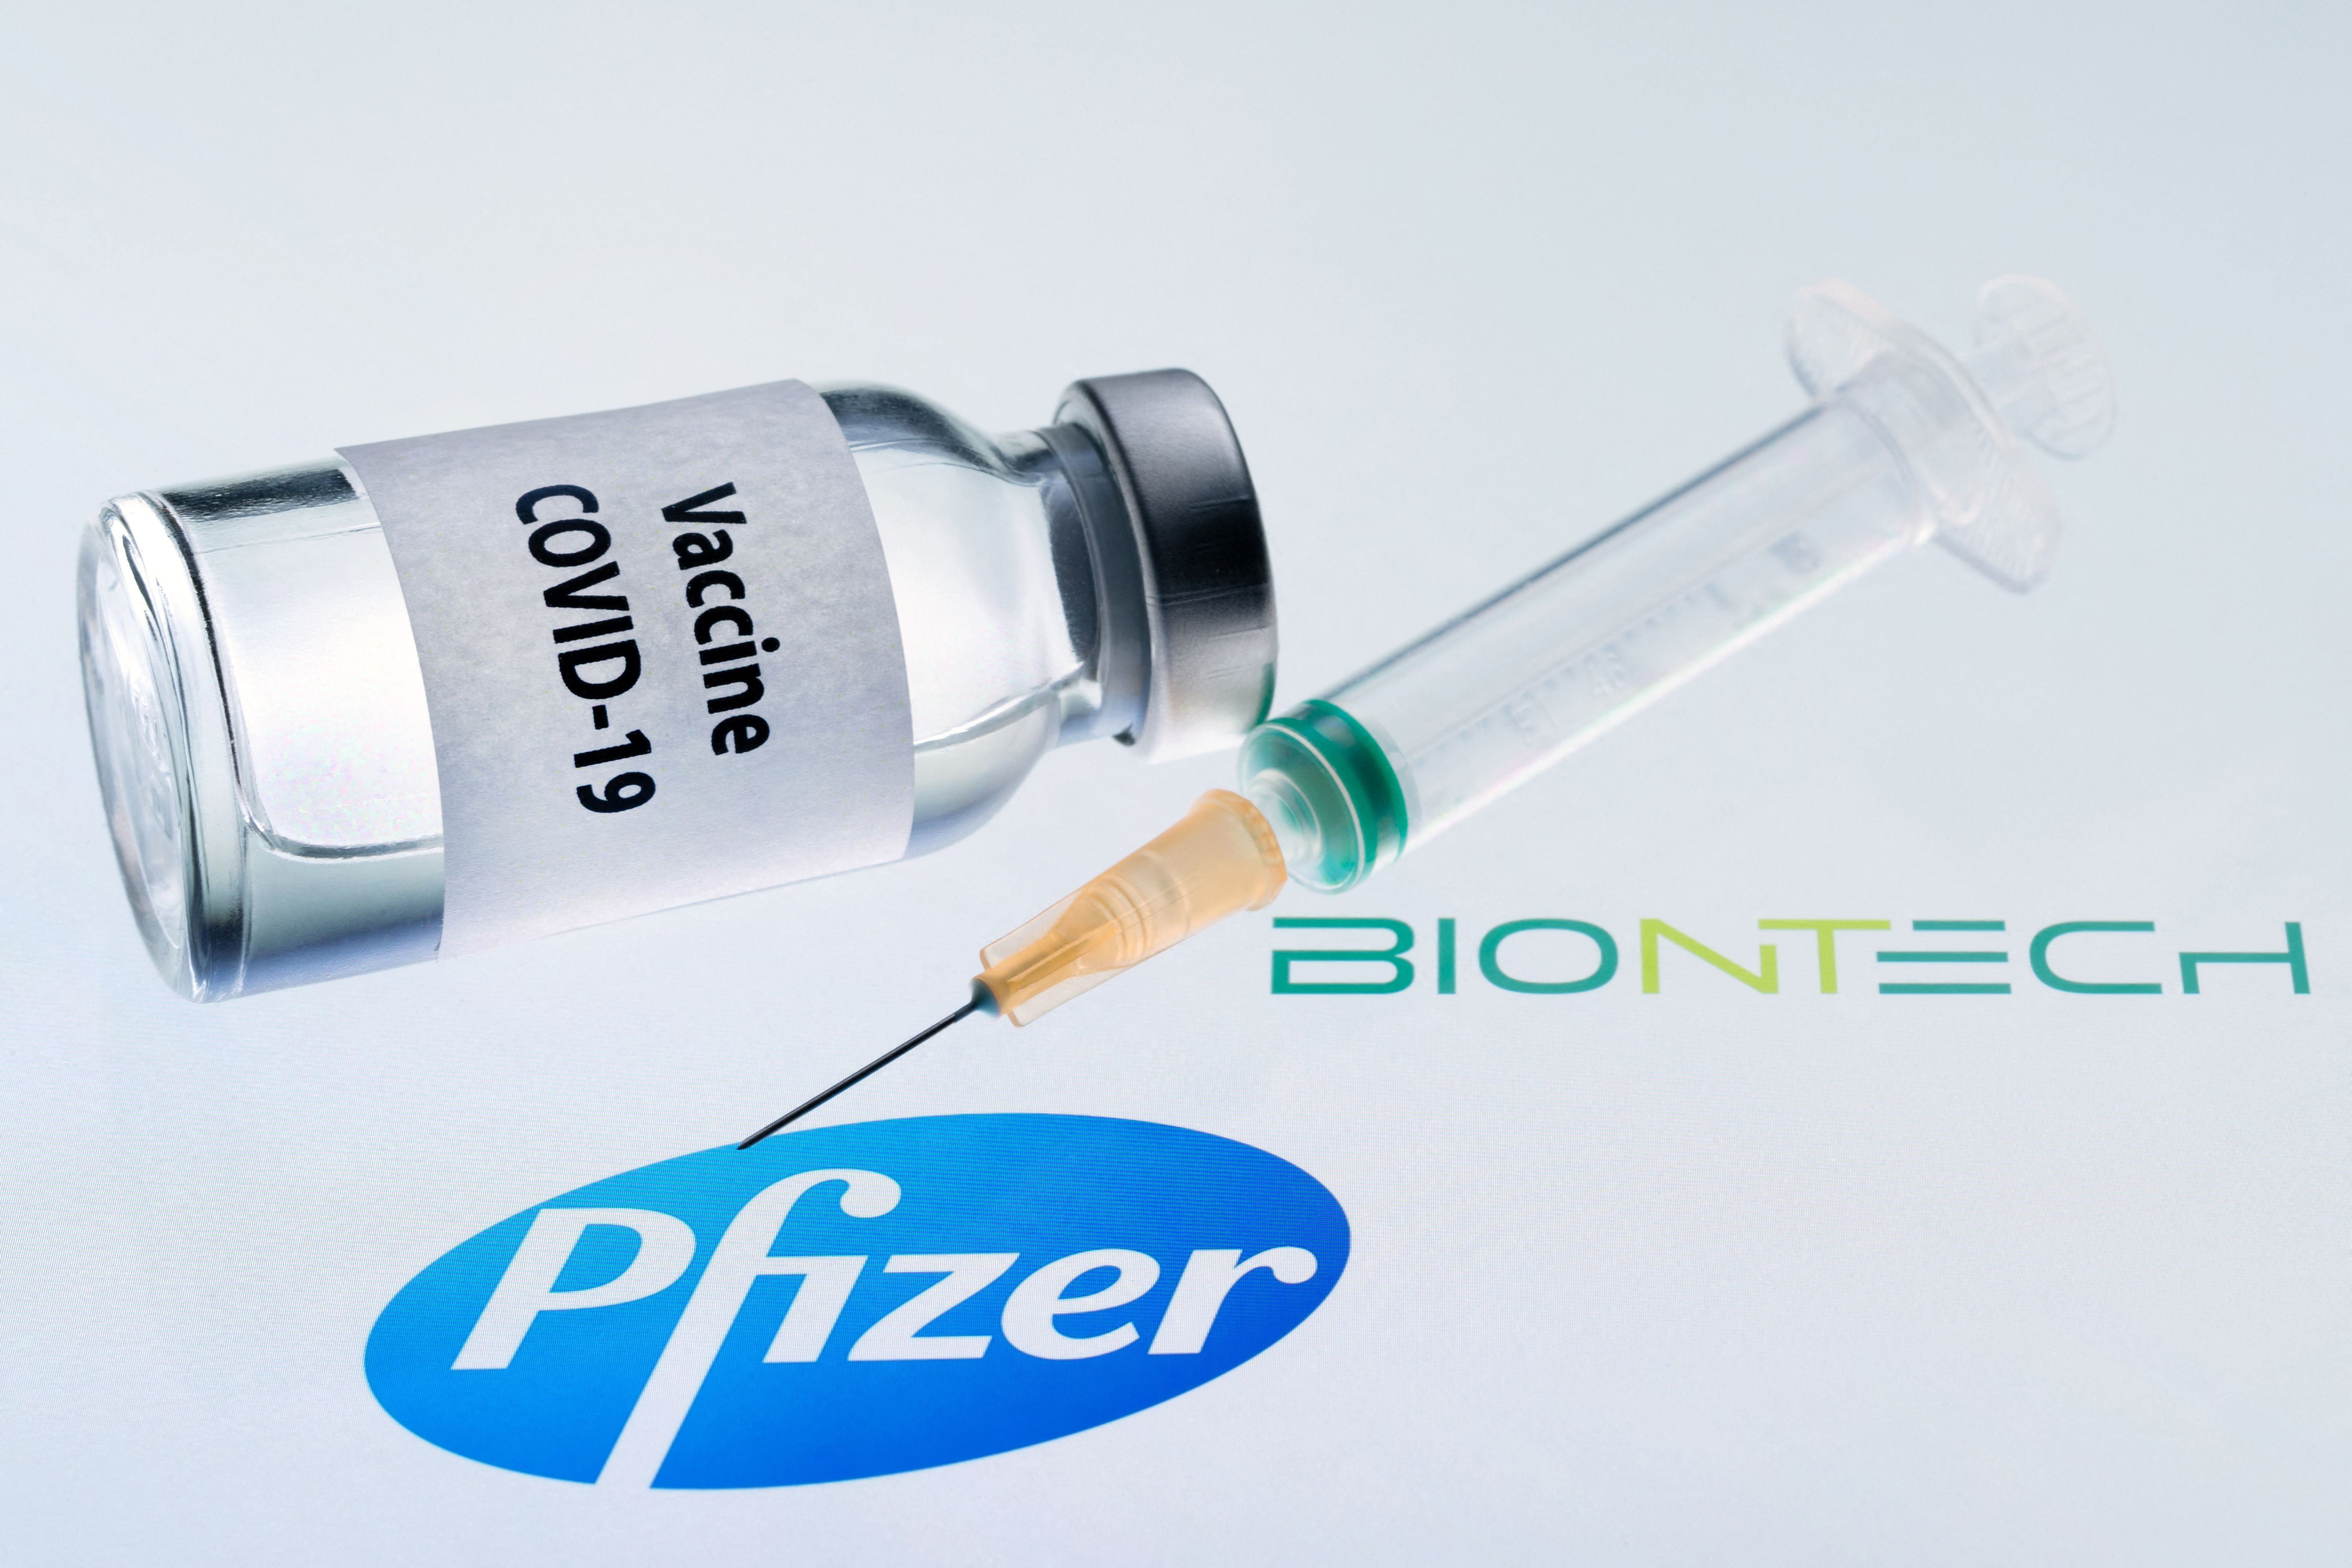 A Pfizer vaccine bottle